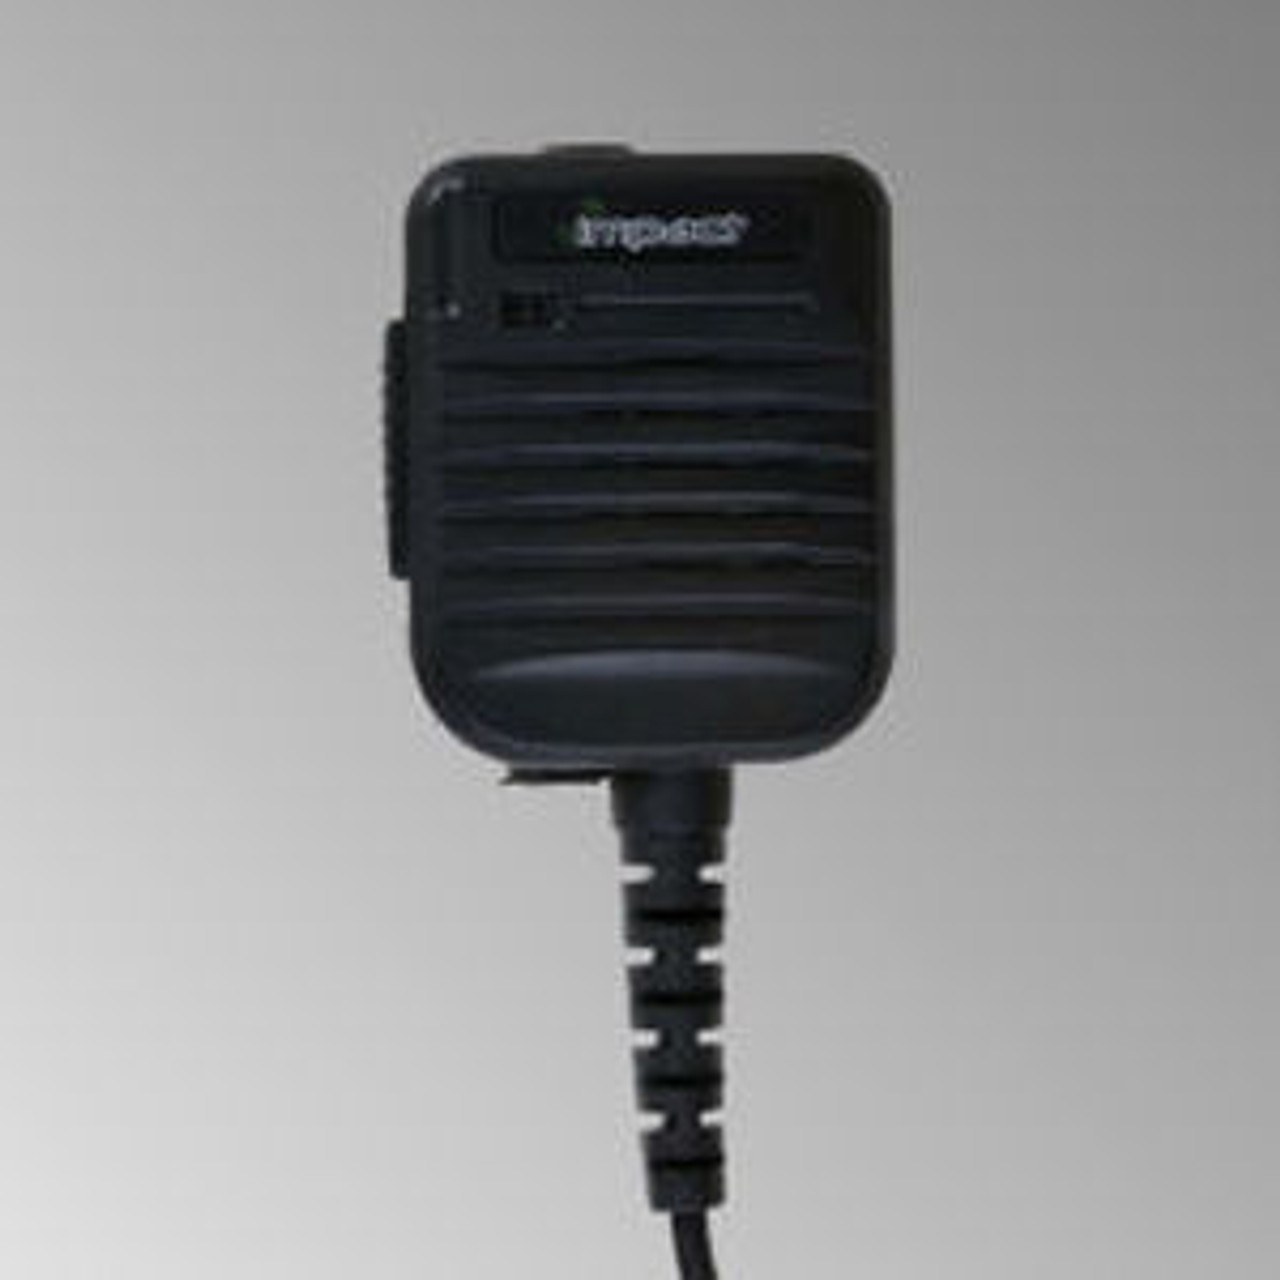 Harris P5200 Ruggedized IP67 Public Safety Speaker Mic.